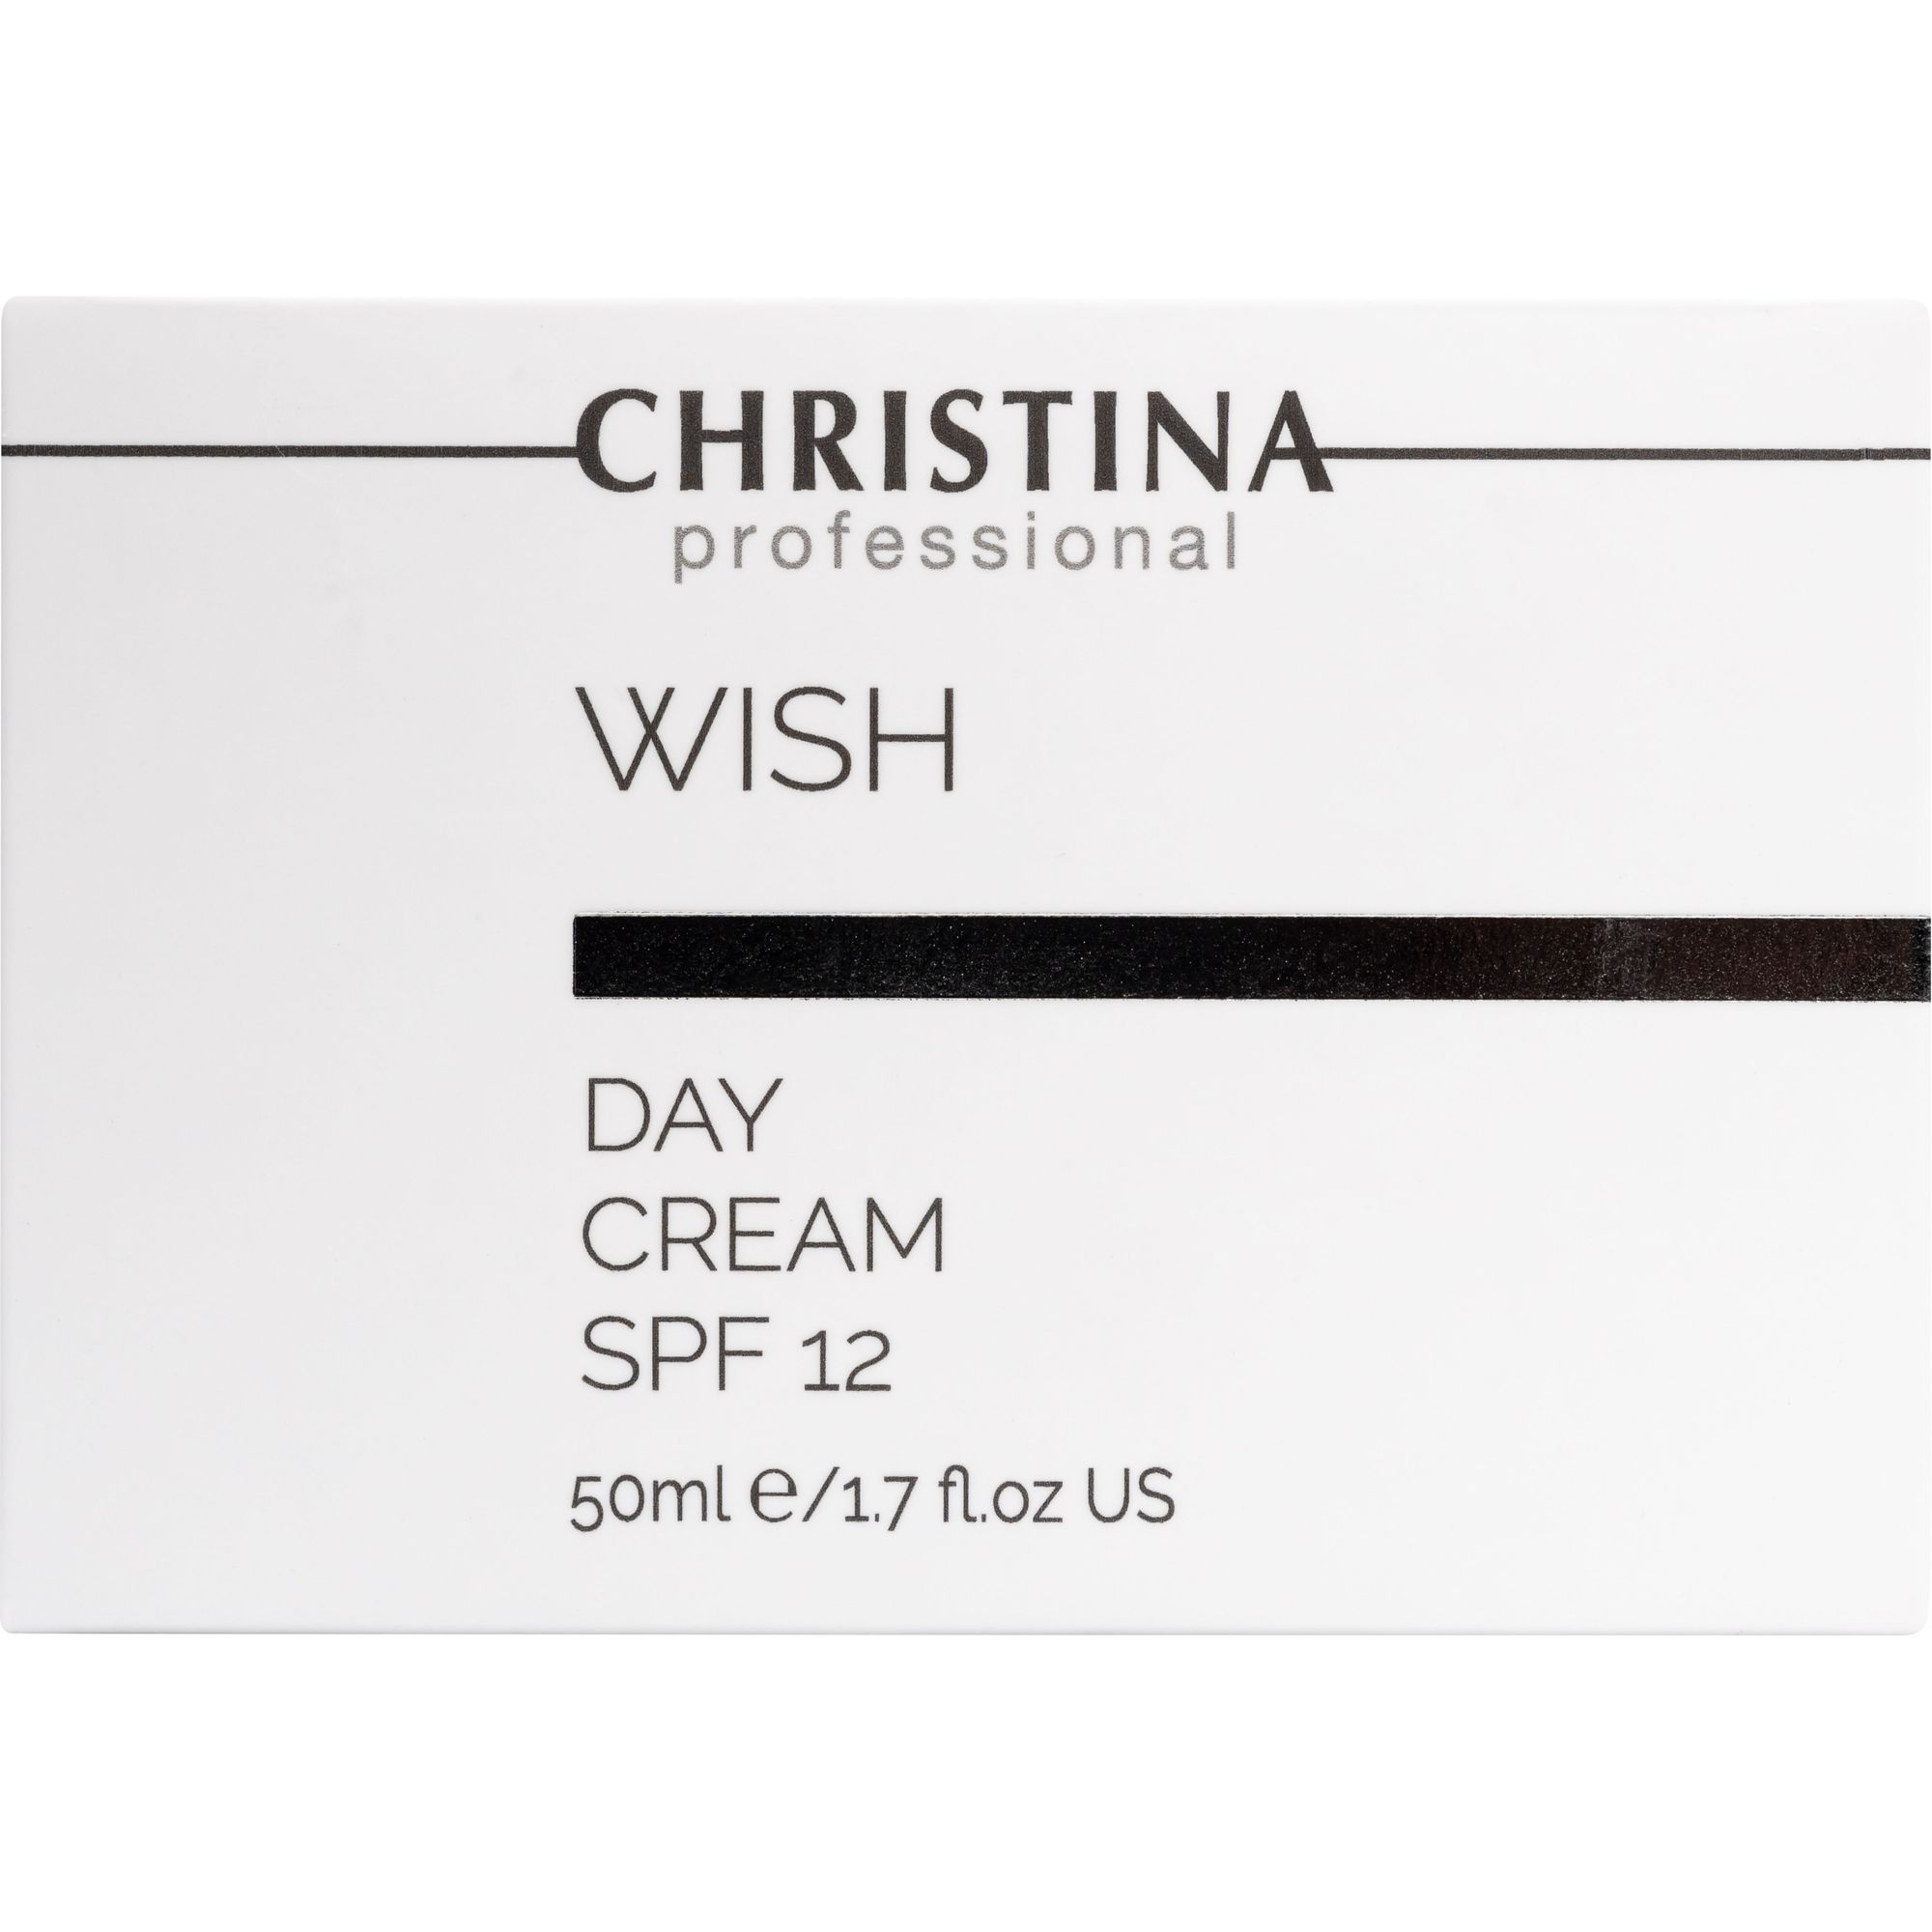 Дневной крем Christina Wish Day Cream SPF 12 50 мл - фото 2